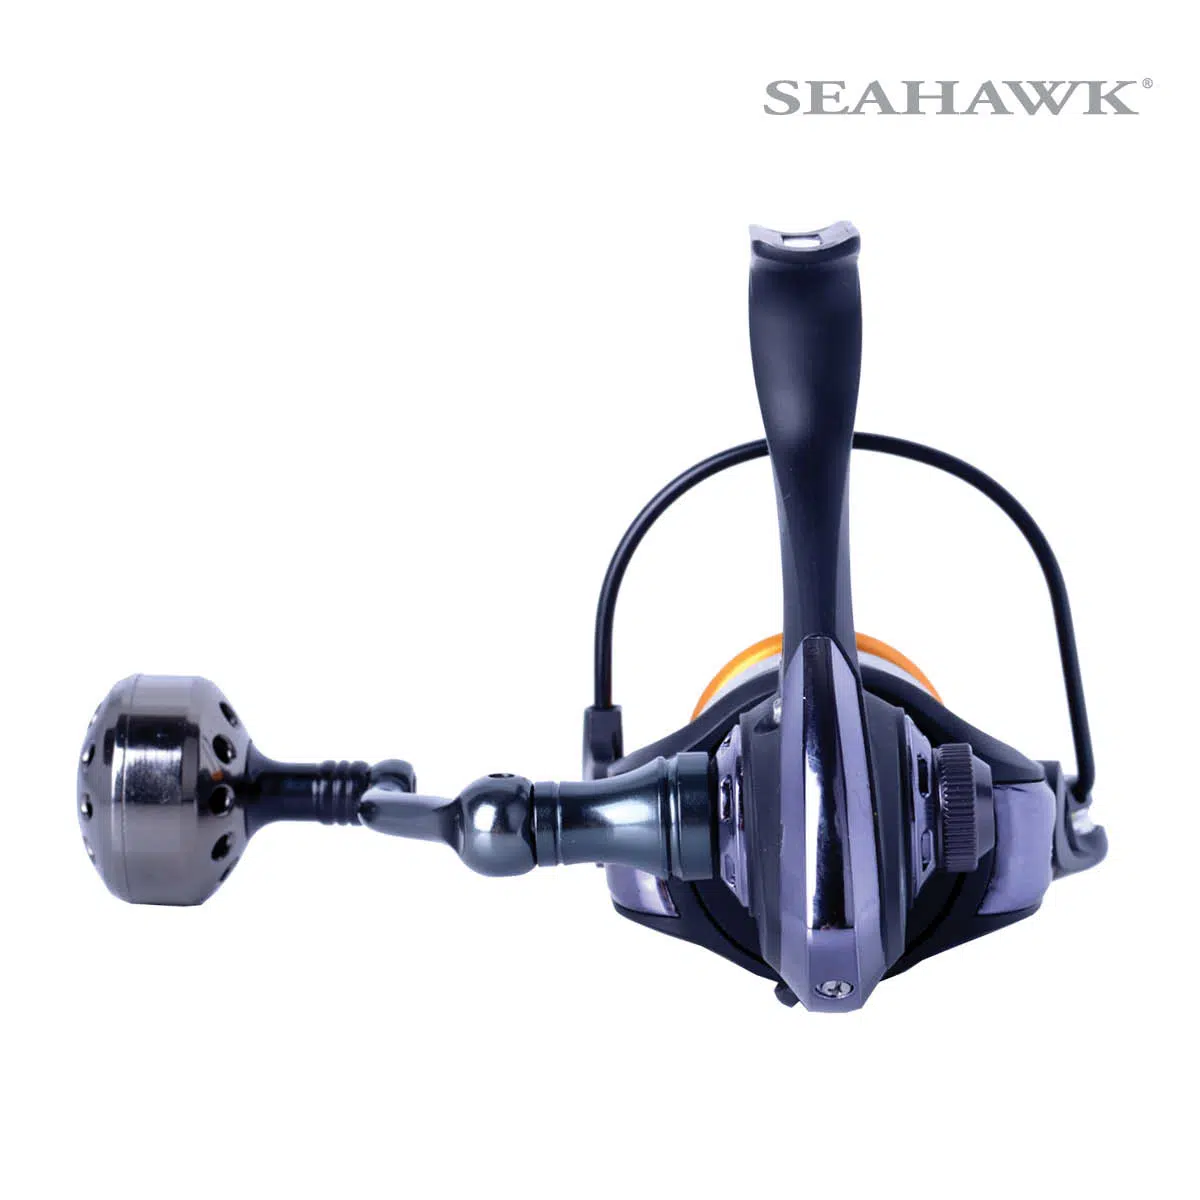 https://seahawkfishing.com/wp-content/uploads/2021/07/Seahawk-Black-Night-BK-03.jpg.webp